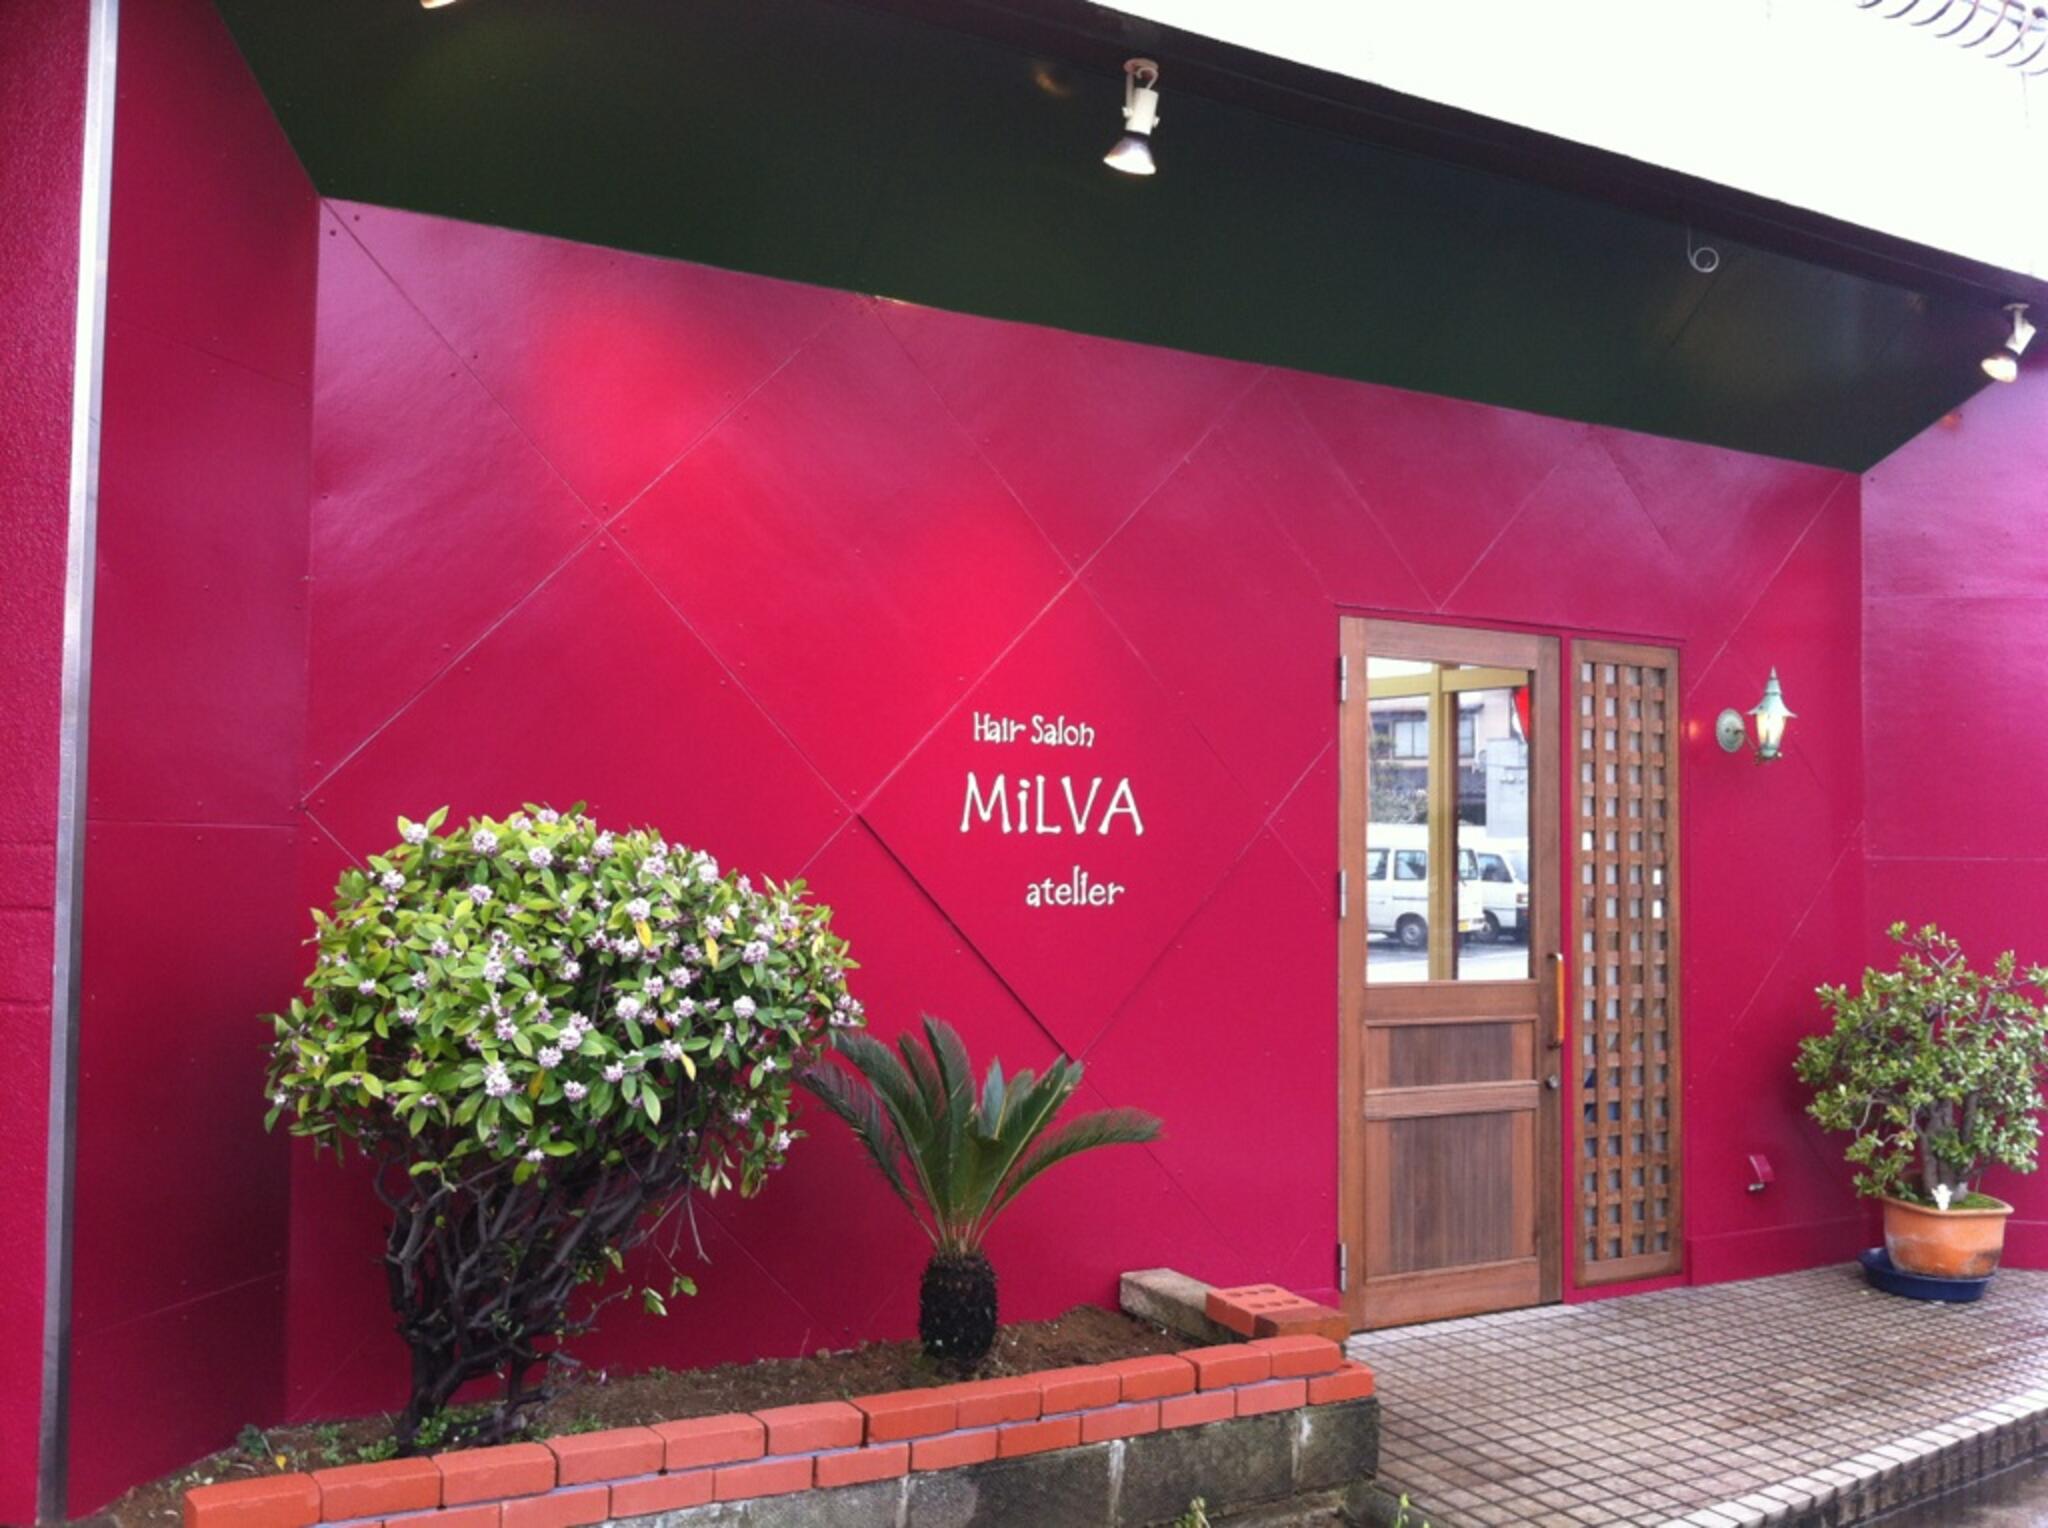 MiLVA atelierの代表写真1